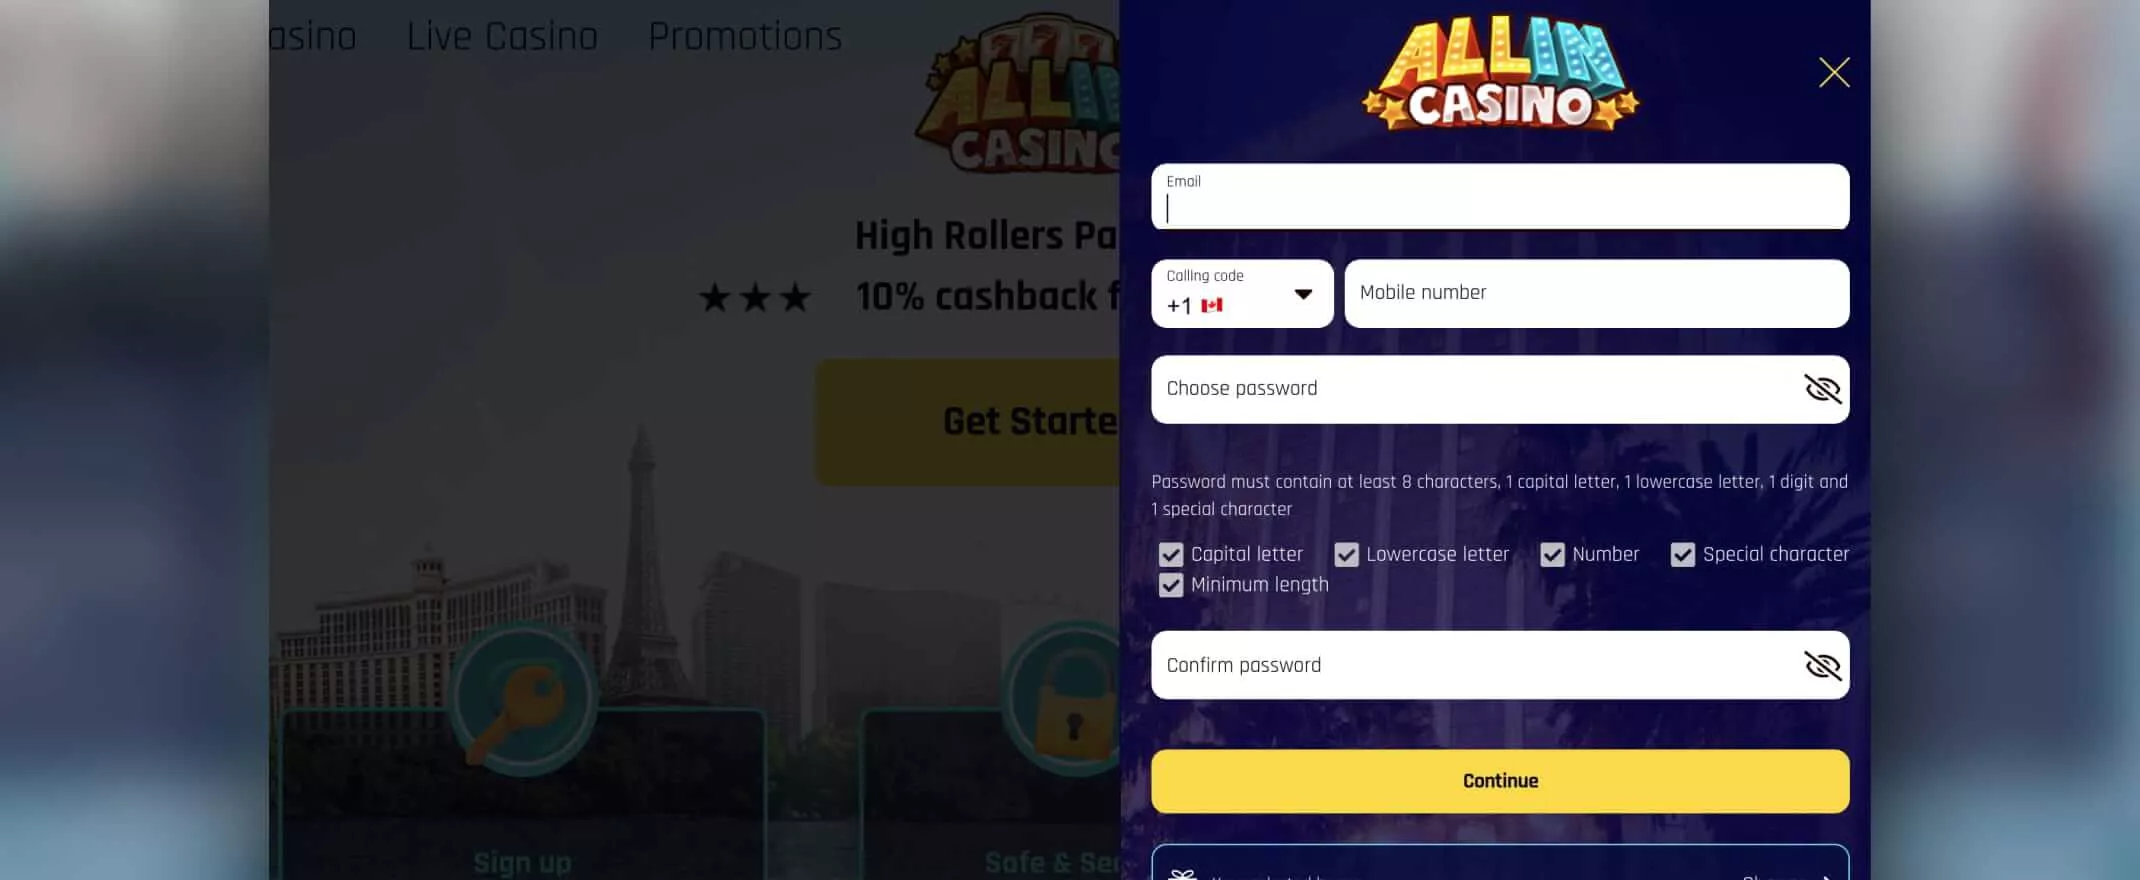 All in casino screenshot of registration